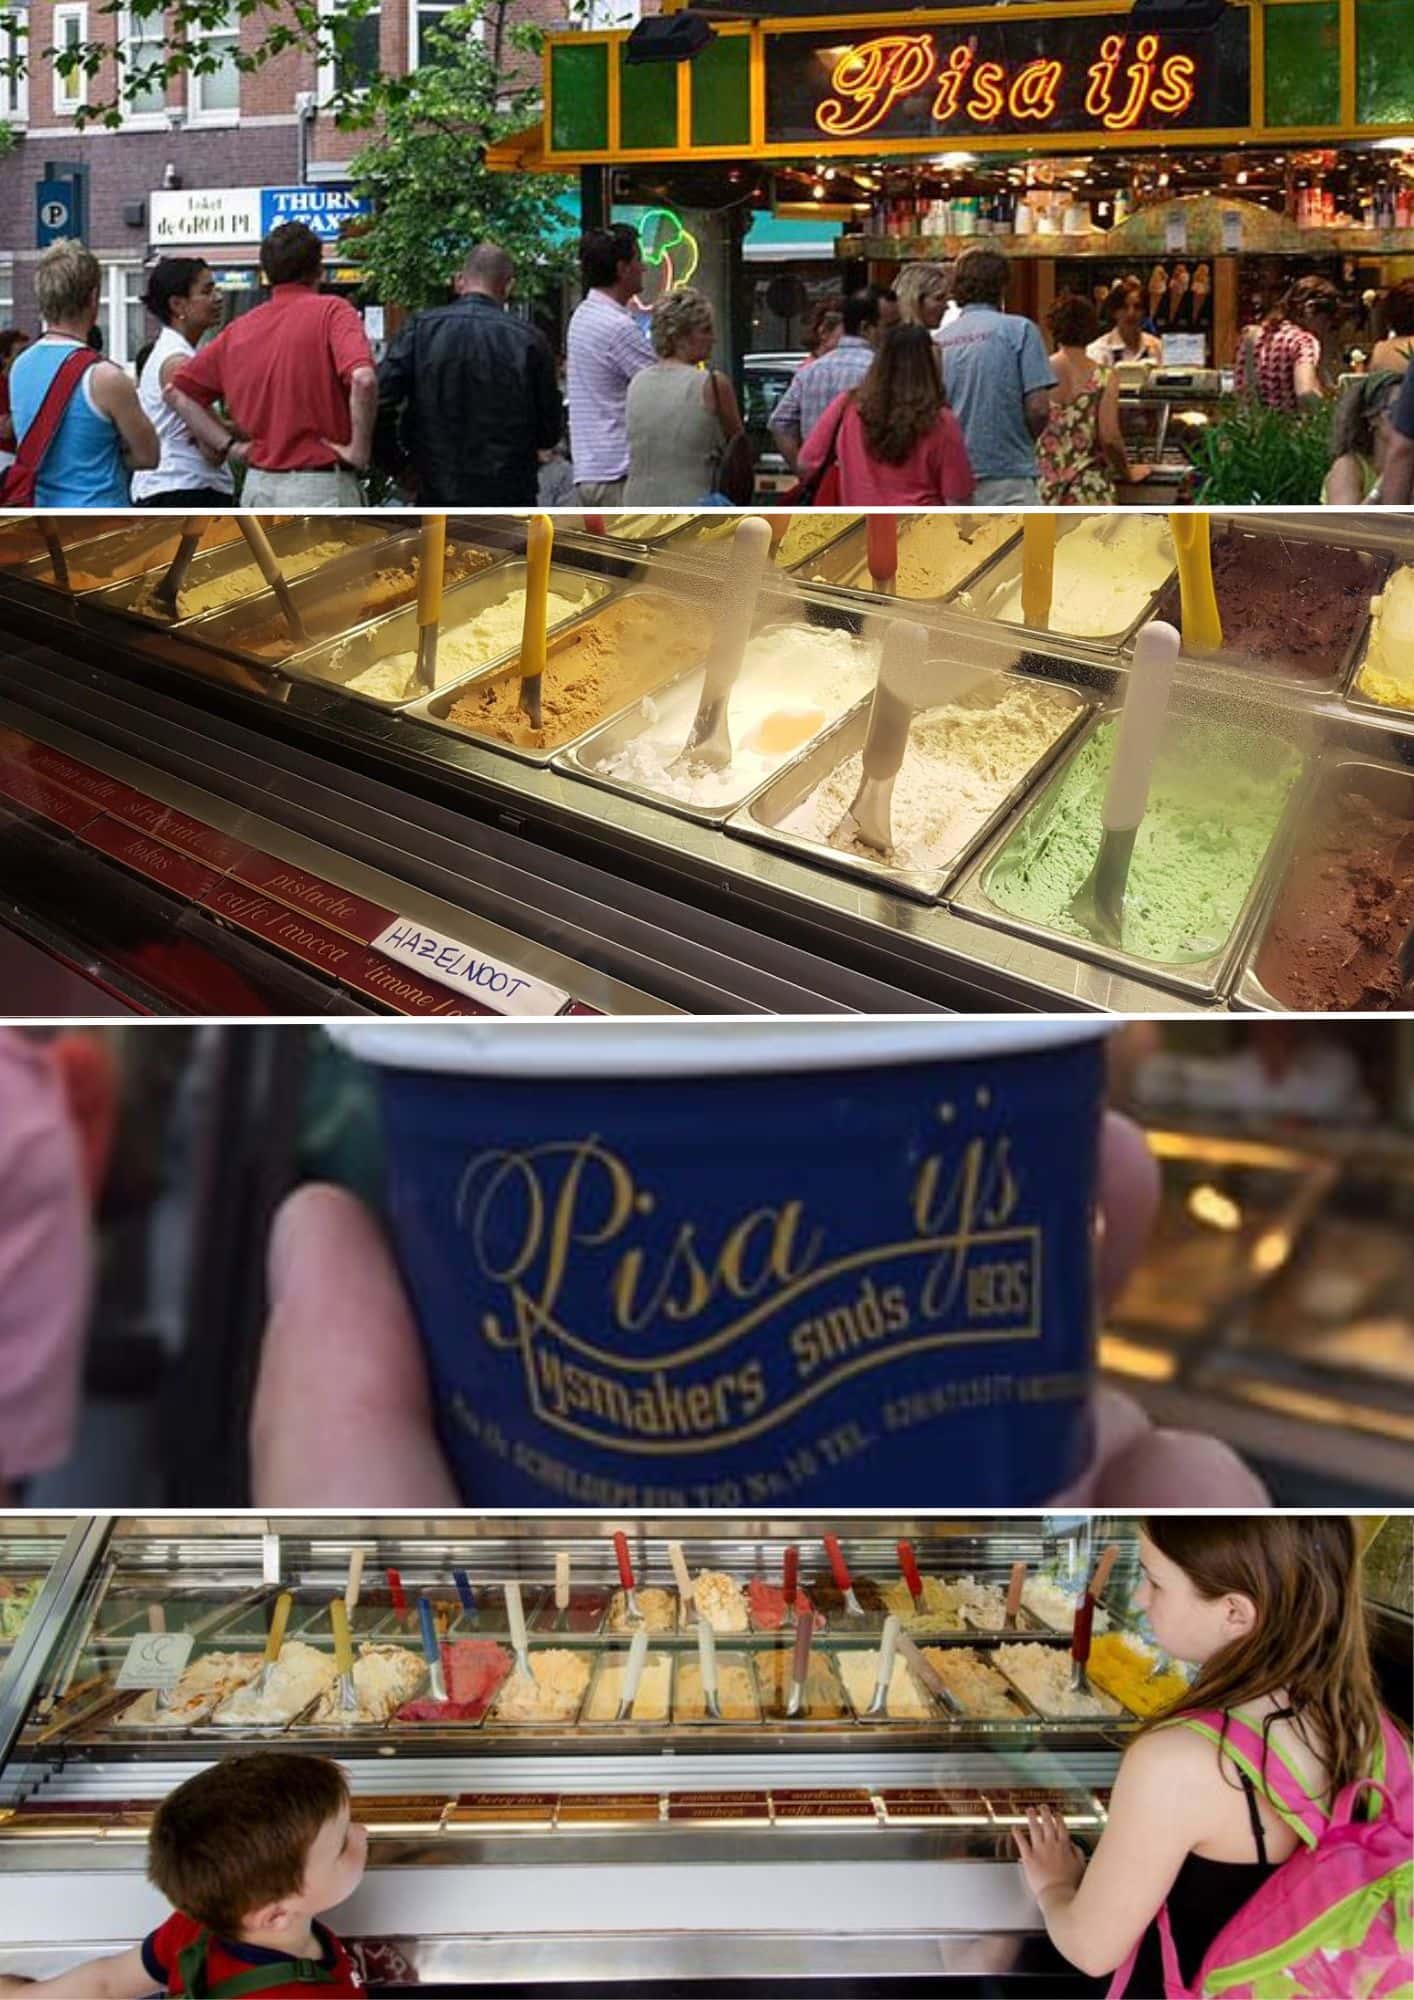 Pisa Ijs Ice cream salons